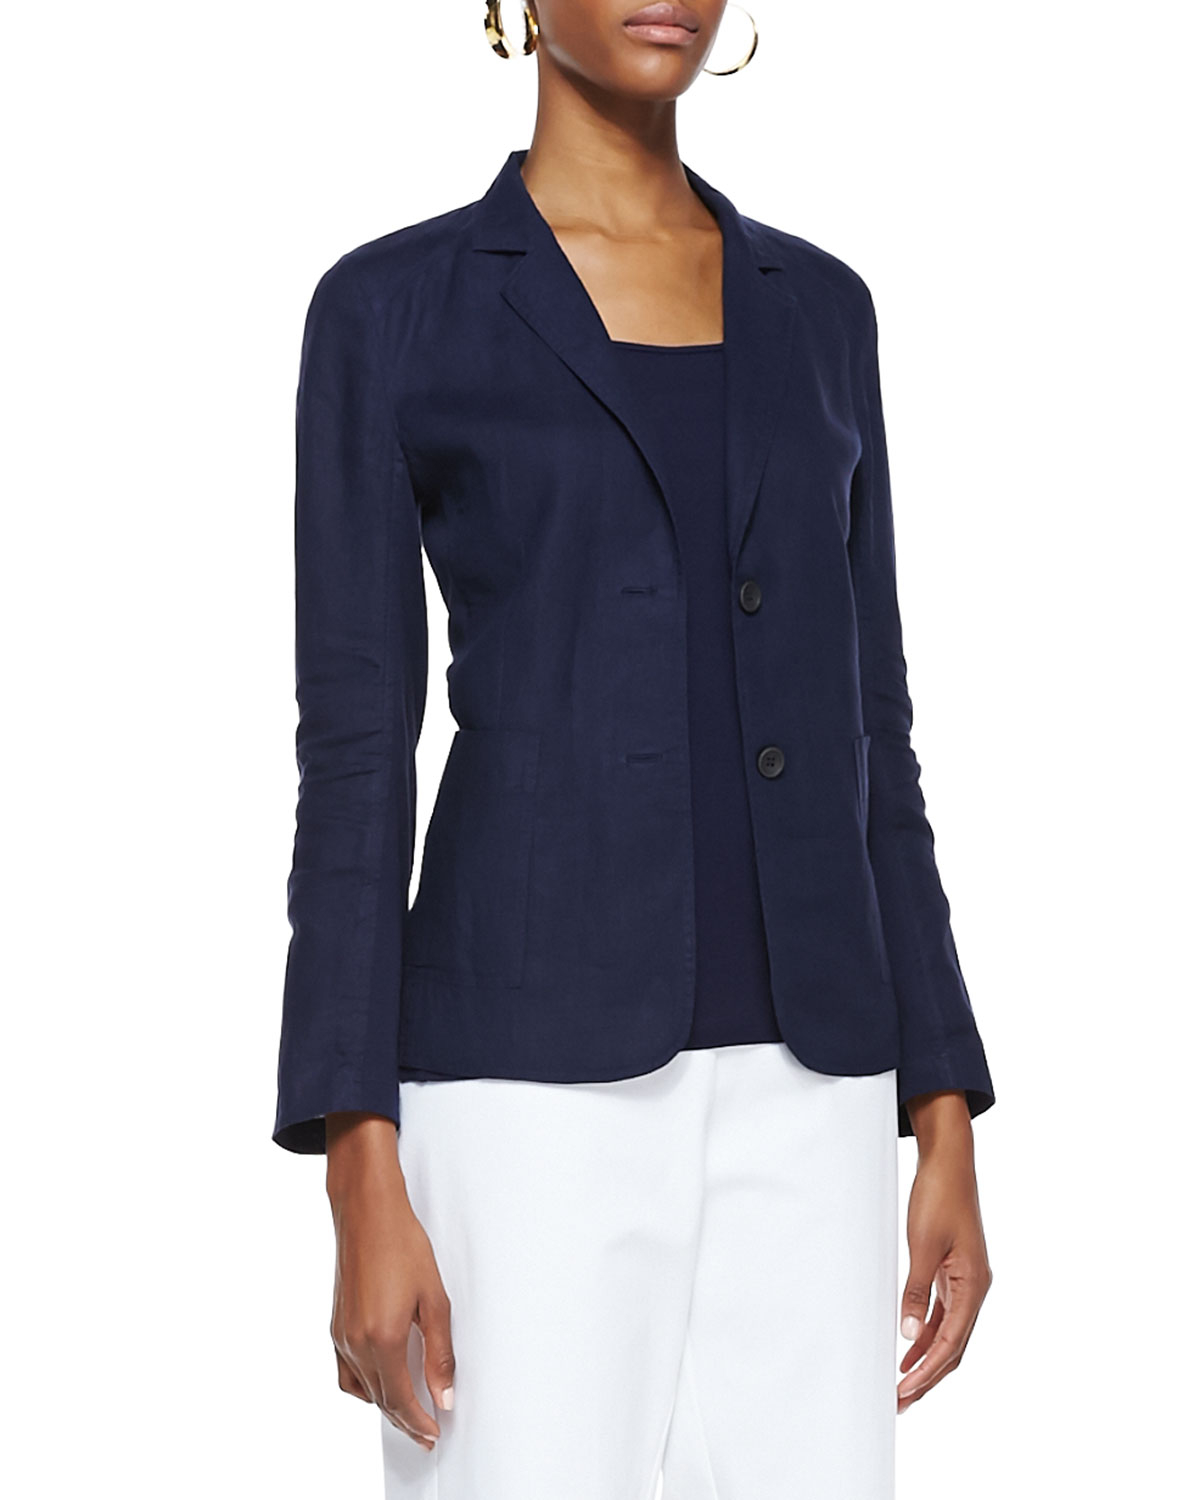 Lyst - Eileen Fisher Handkerchief Linen 2-Button Jacket in Blue